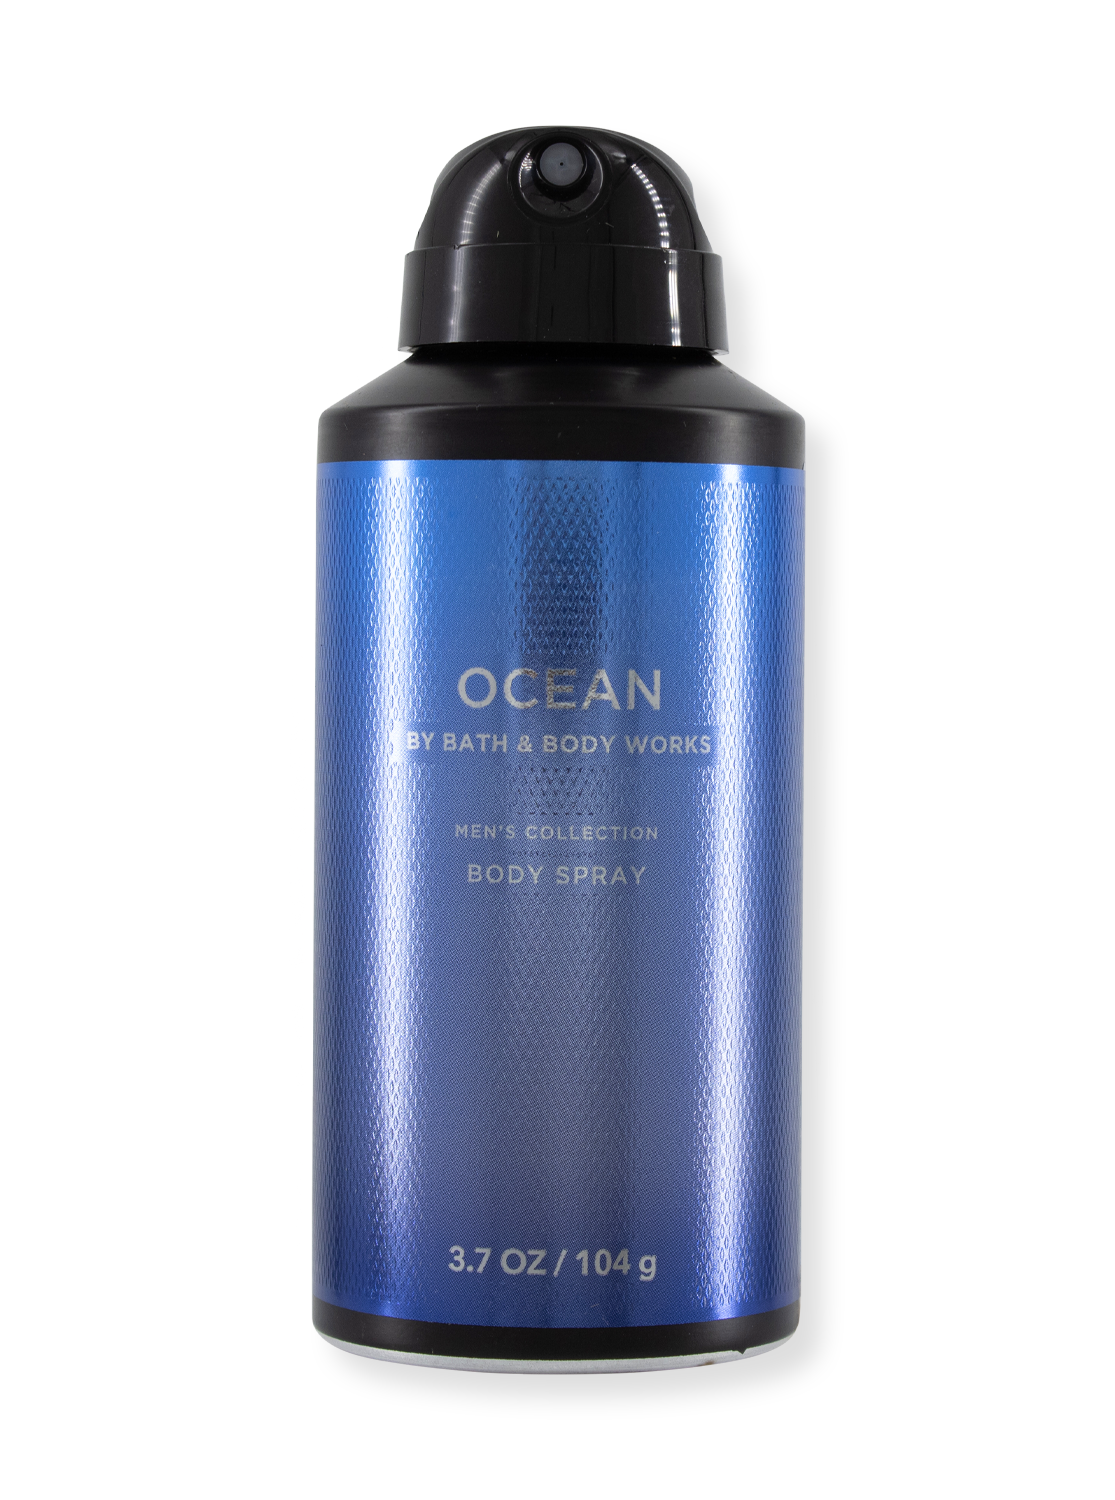 Spray corporel - Océan - pour les hommes - 104G